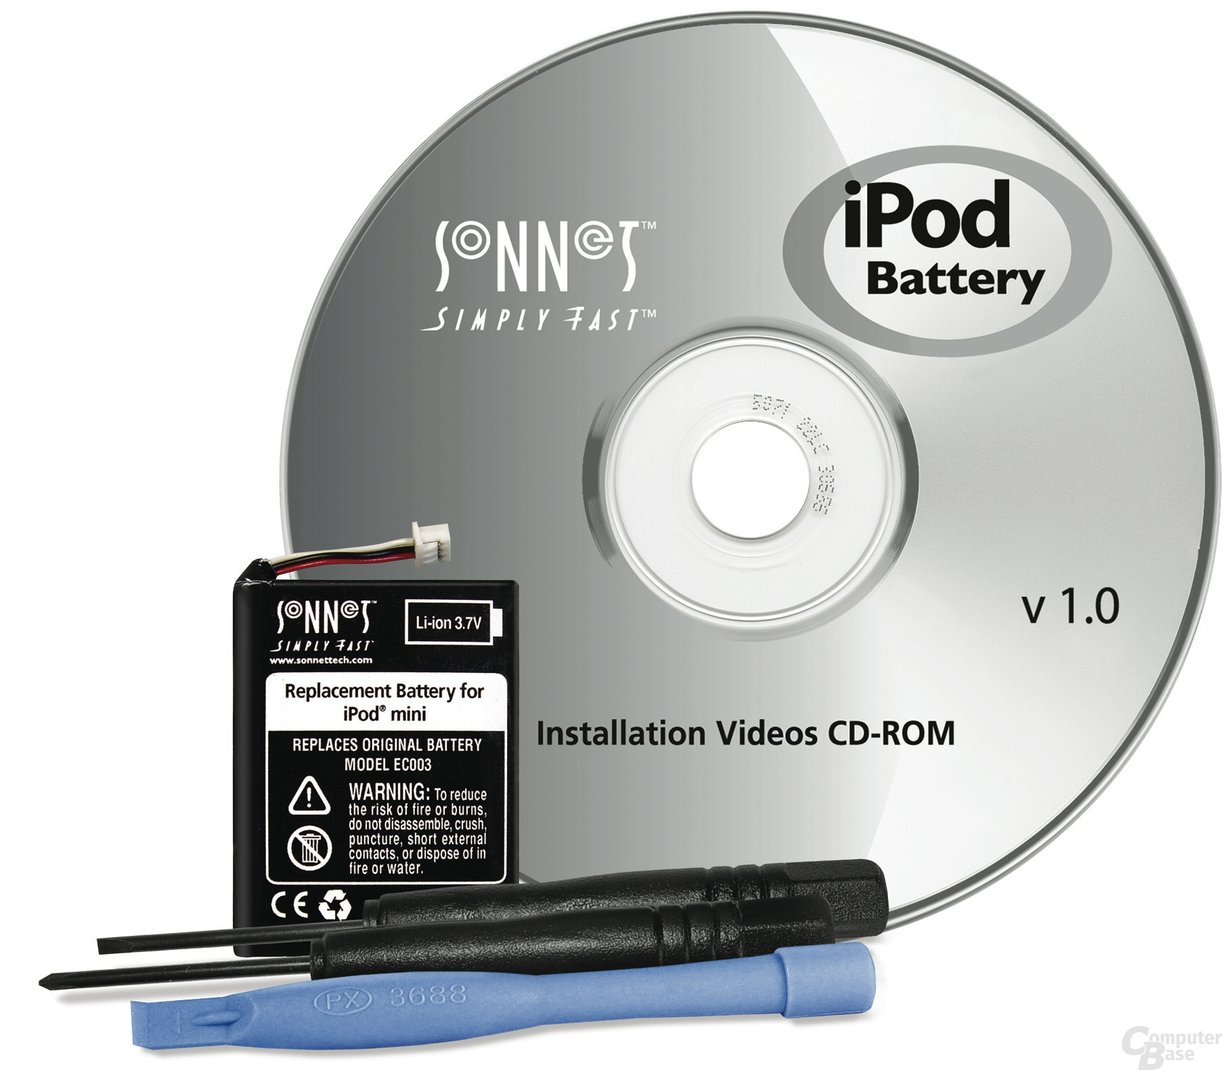 Sonnet iPod Battery